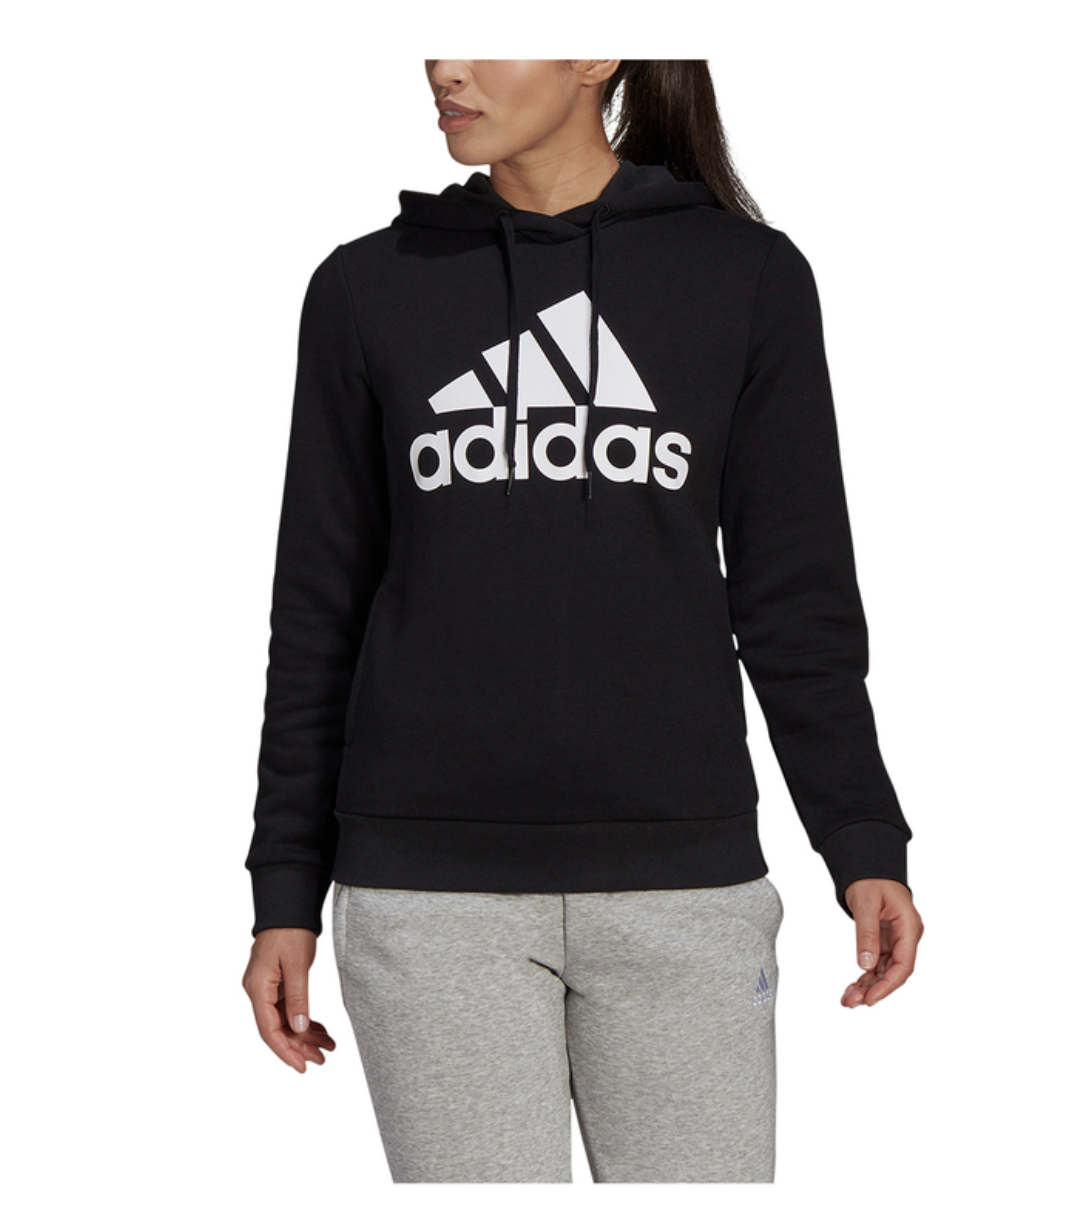 Adidas Women's Fleece Hoodie Black with White logo